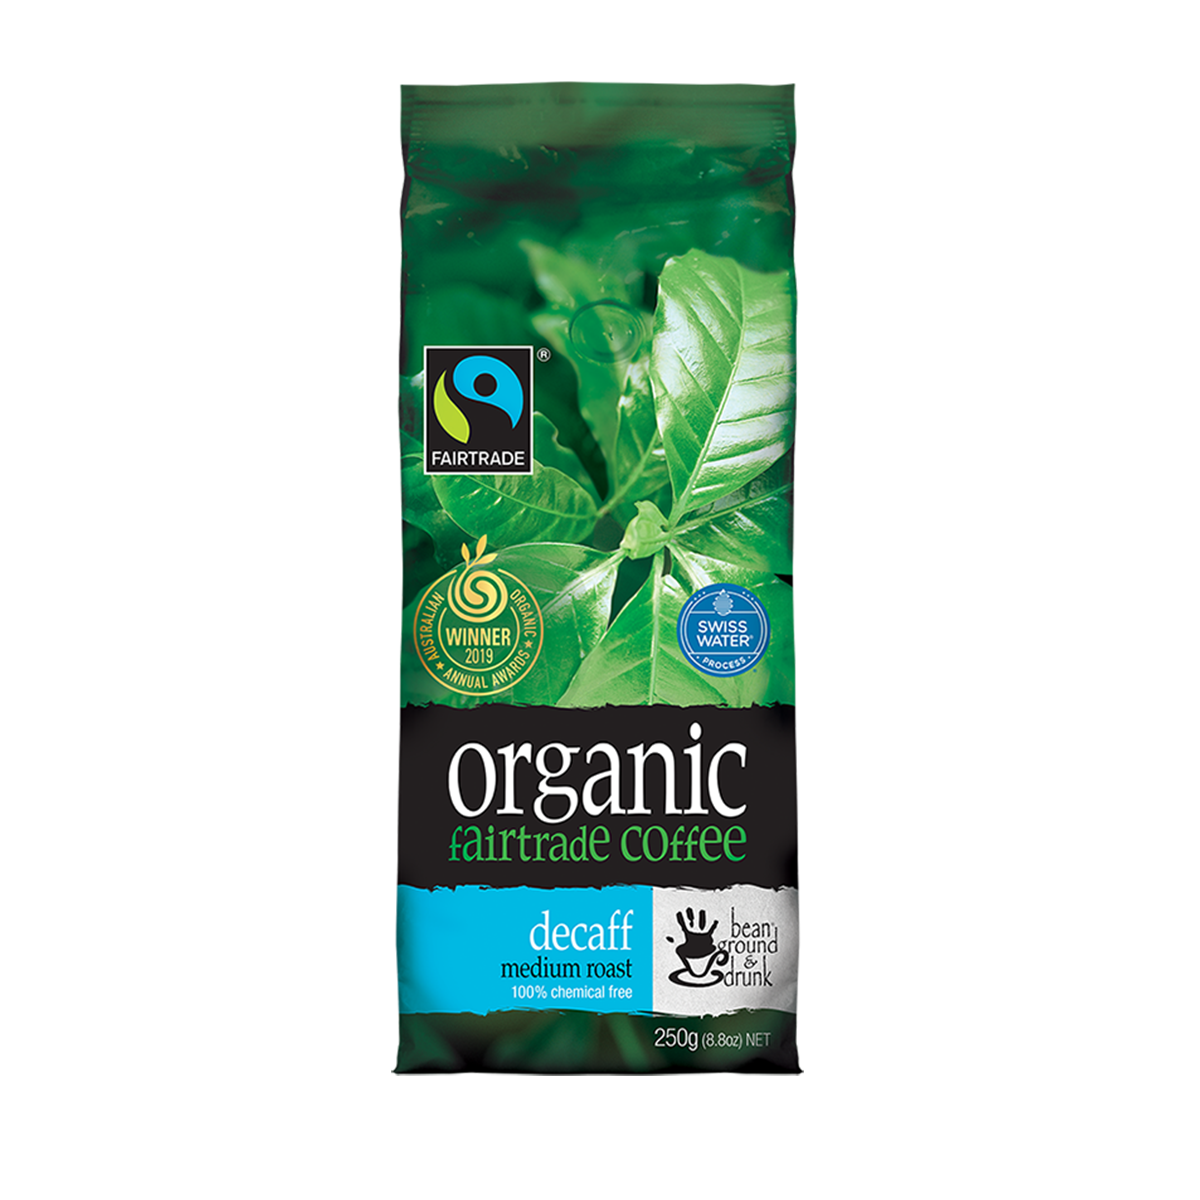 Bean Ground & Drunk - Australian Organic Fairtrade Coffee Beans (100% Arabica): Decaffeinated Medium Roast (250g)